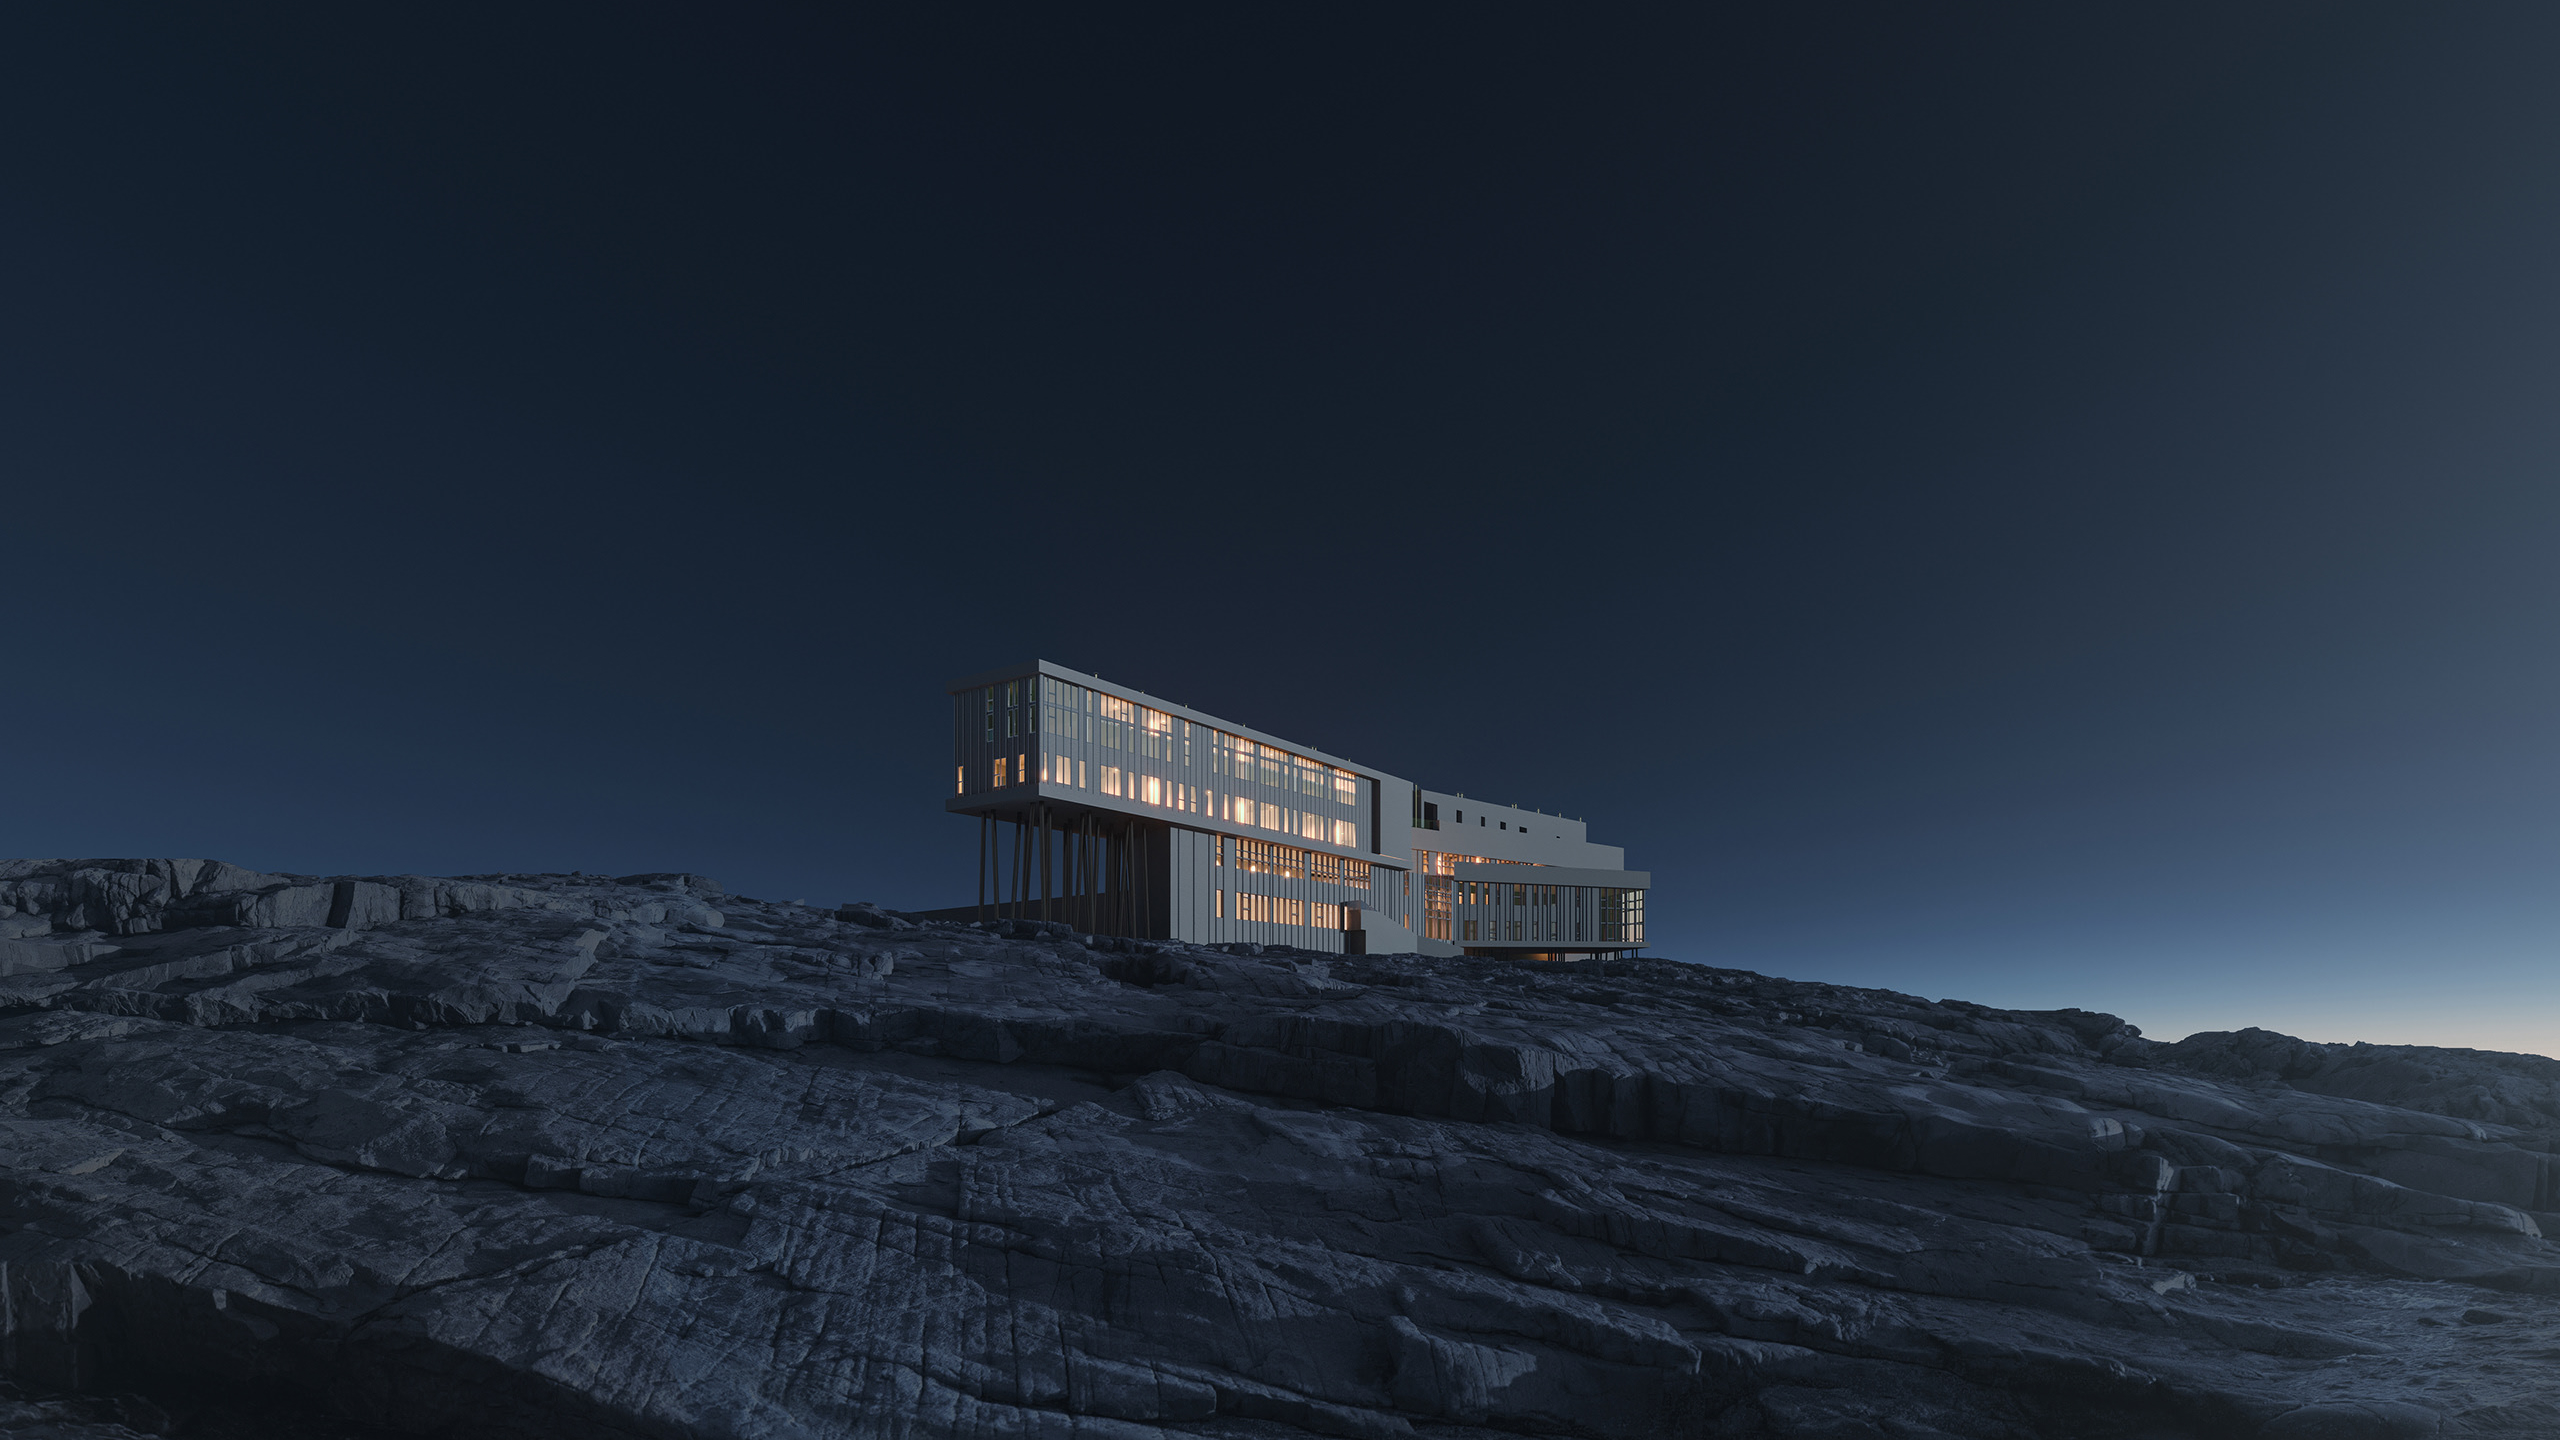 General 2560x1440 architecture house night building hills rocks Canada Newfoundland